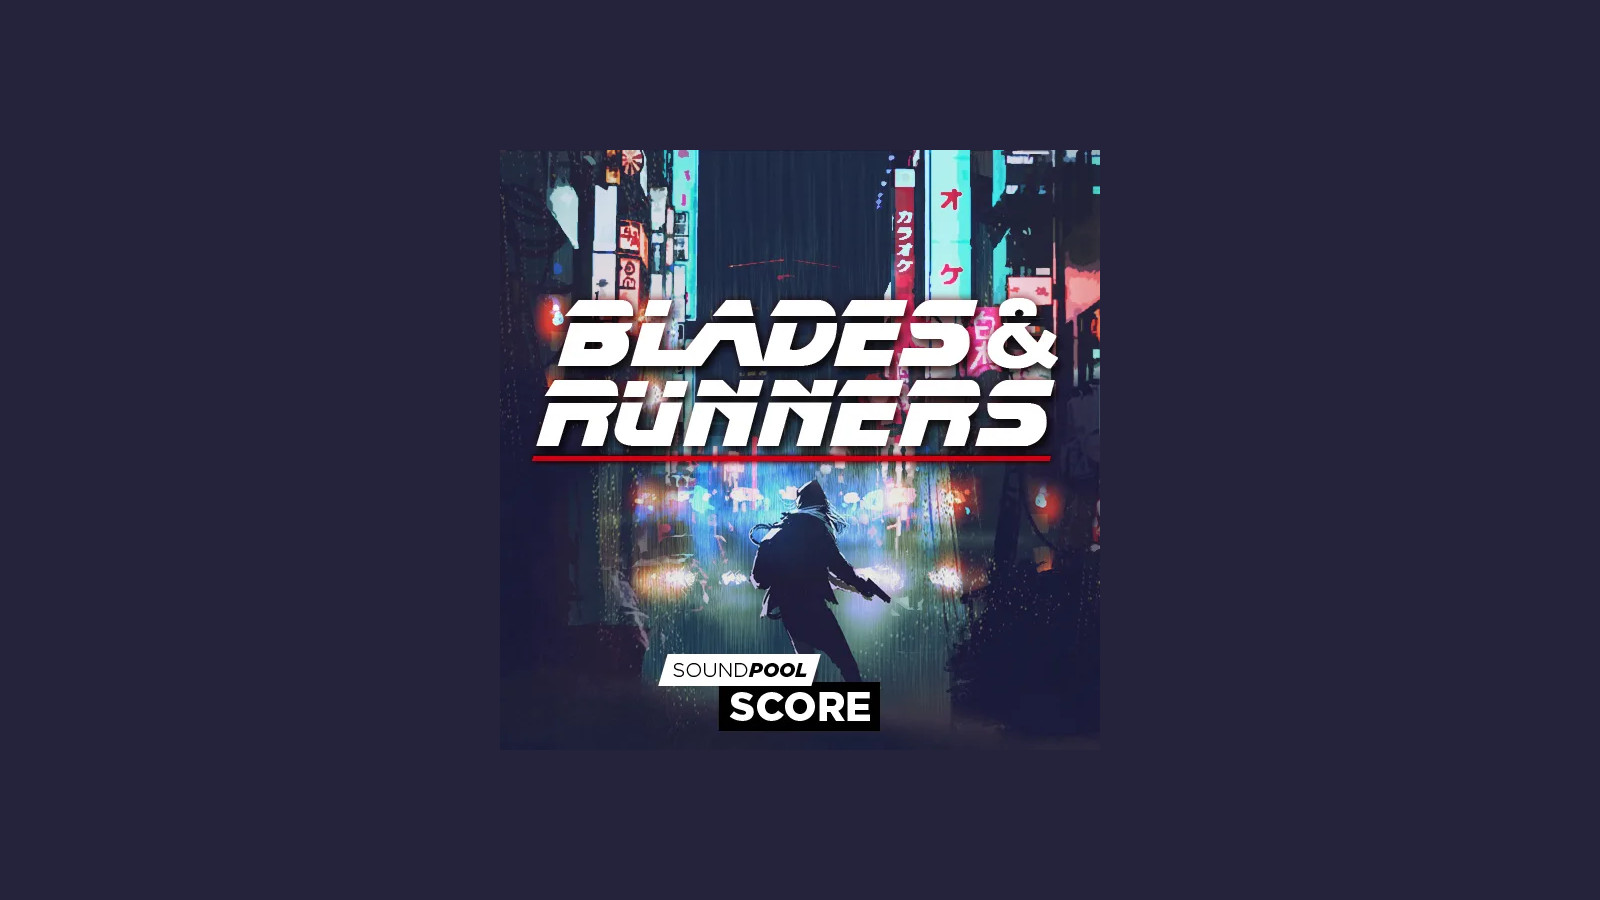 MAGIX Soundpool Blades & Runners ProducerPlanet CD Key, $5.65